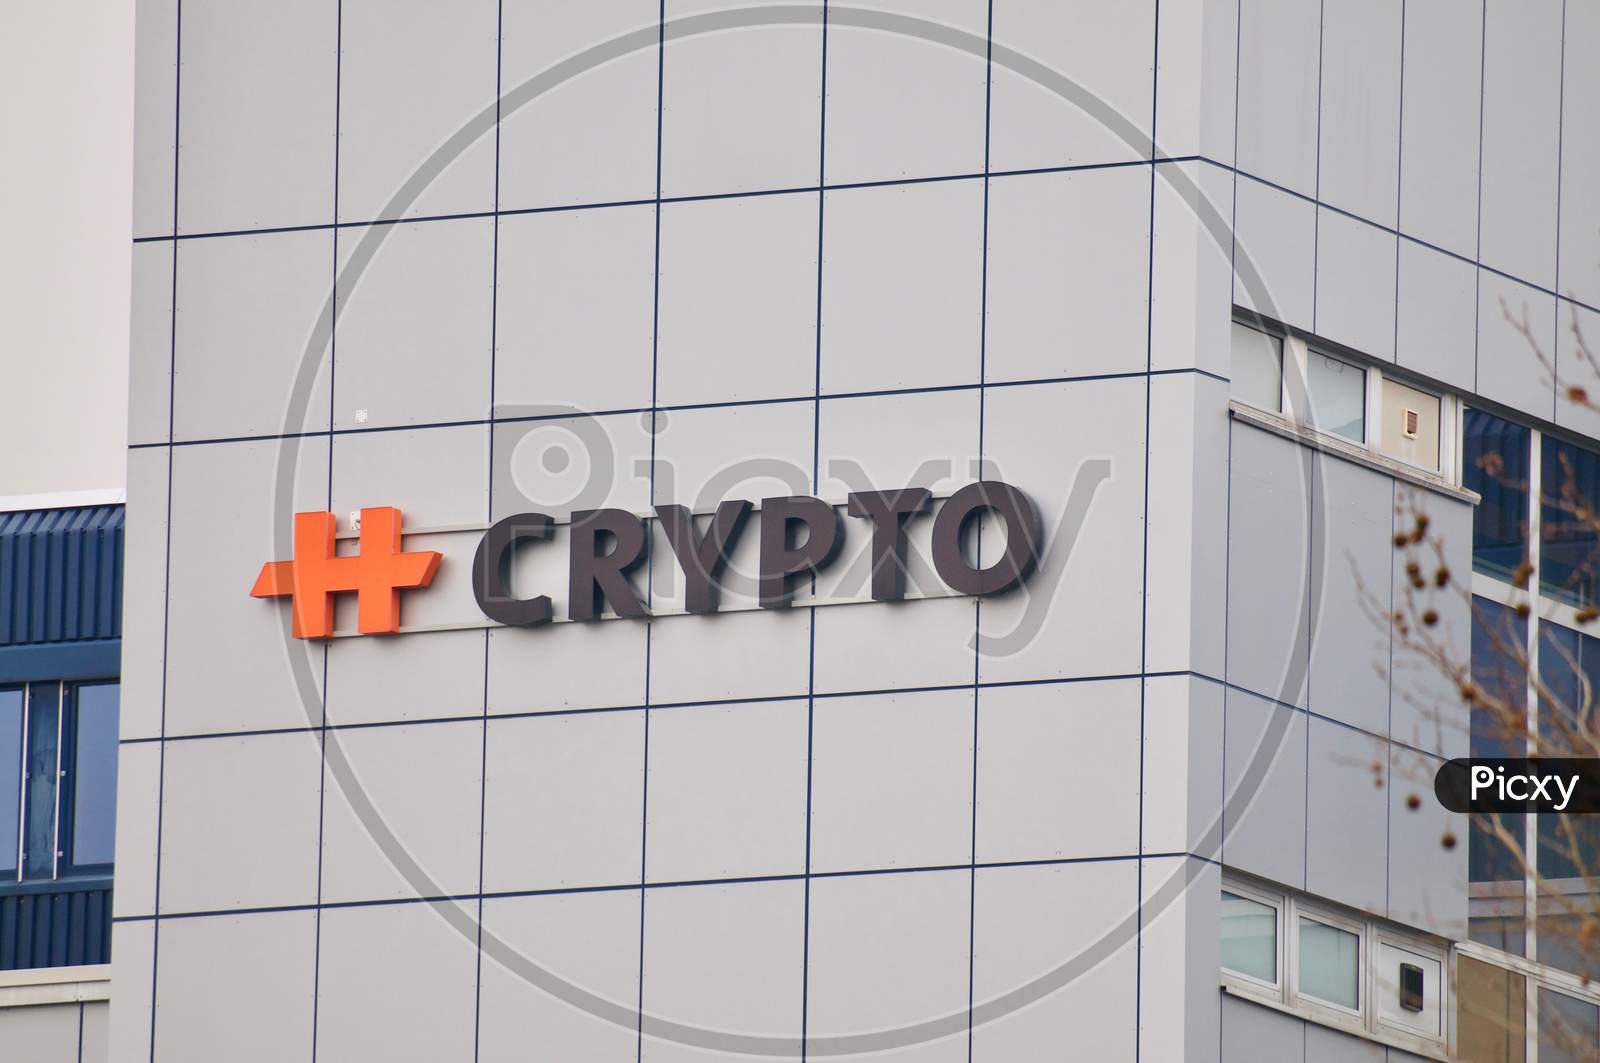 Crypto International Ag Company Sign In Zug, Switzerland